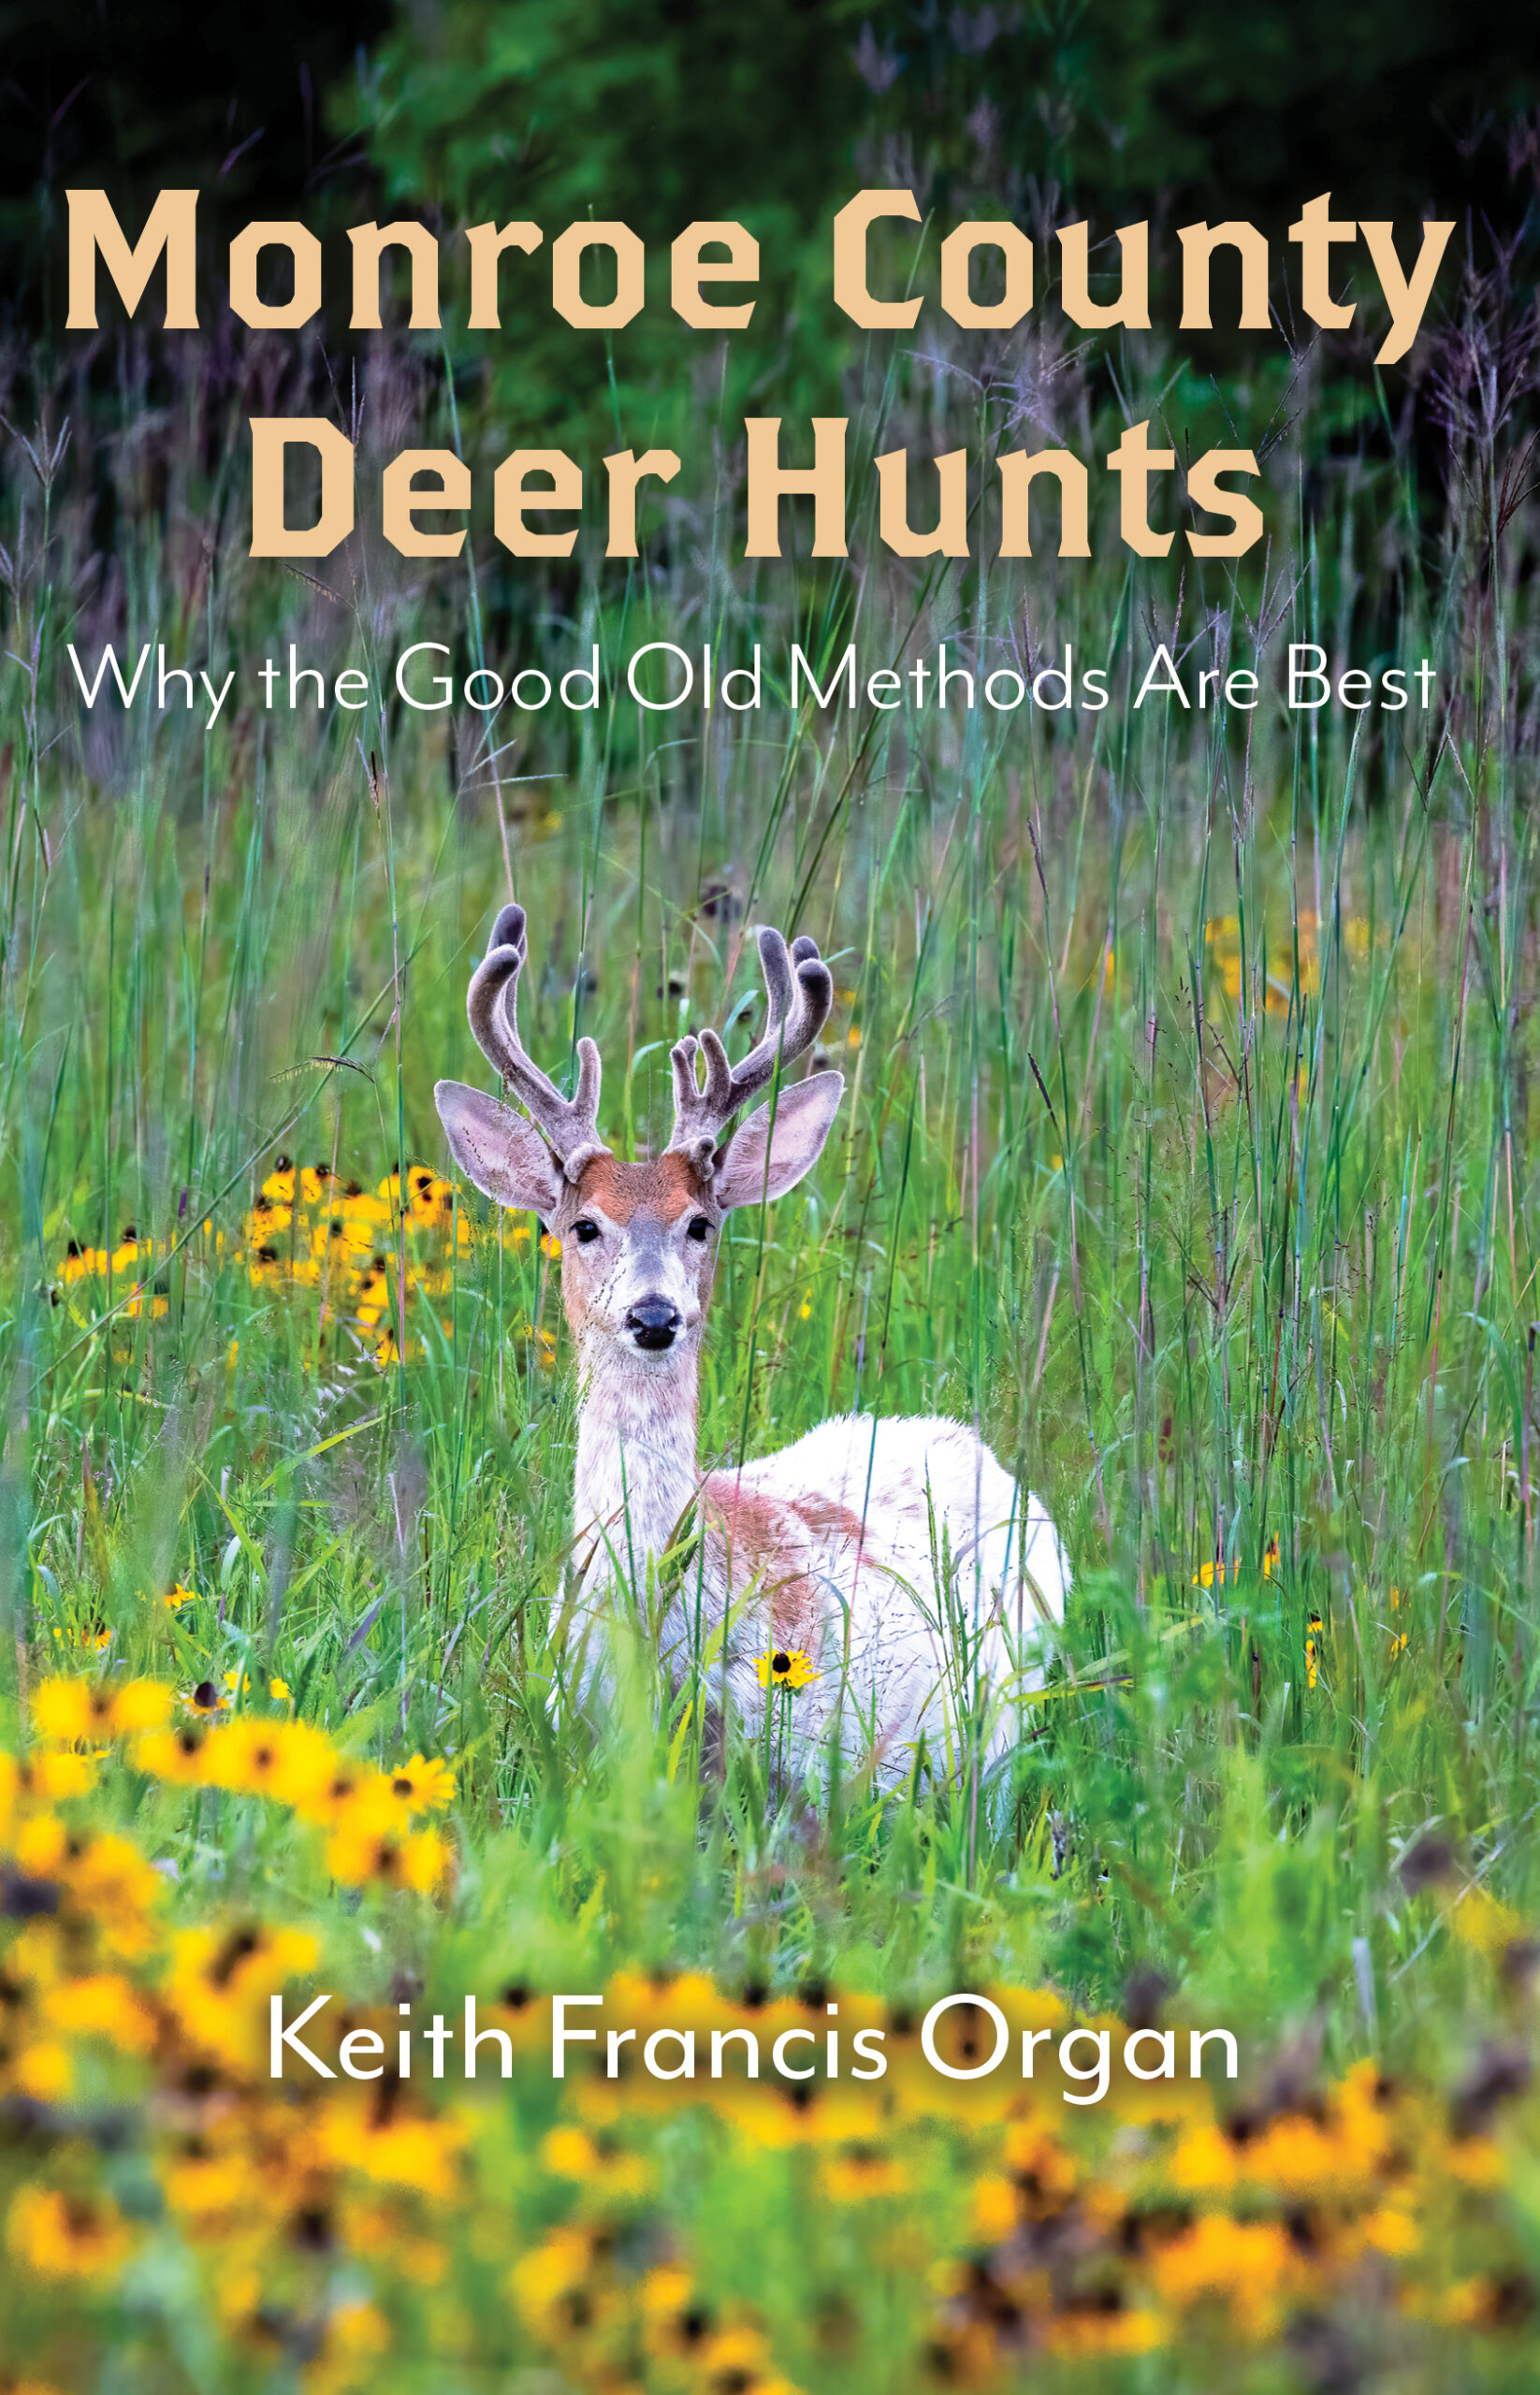 Monroe County Deer Hunts: Why the Good Old Methods Are Best - Wheatmark